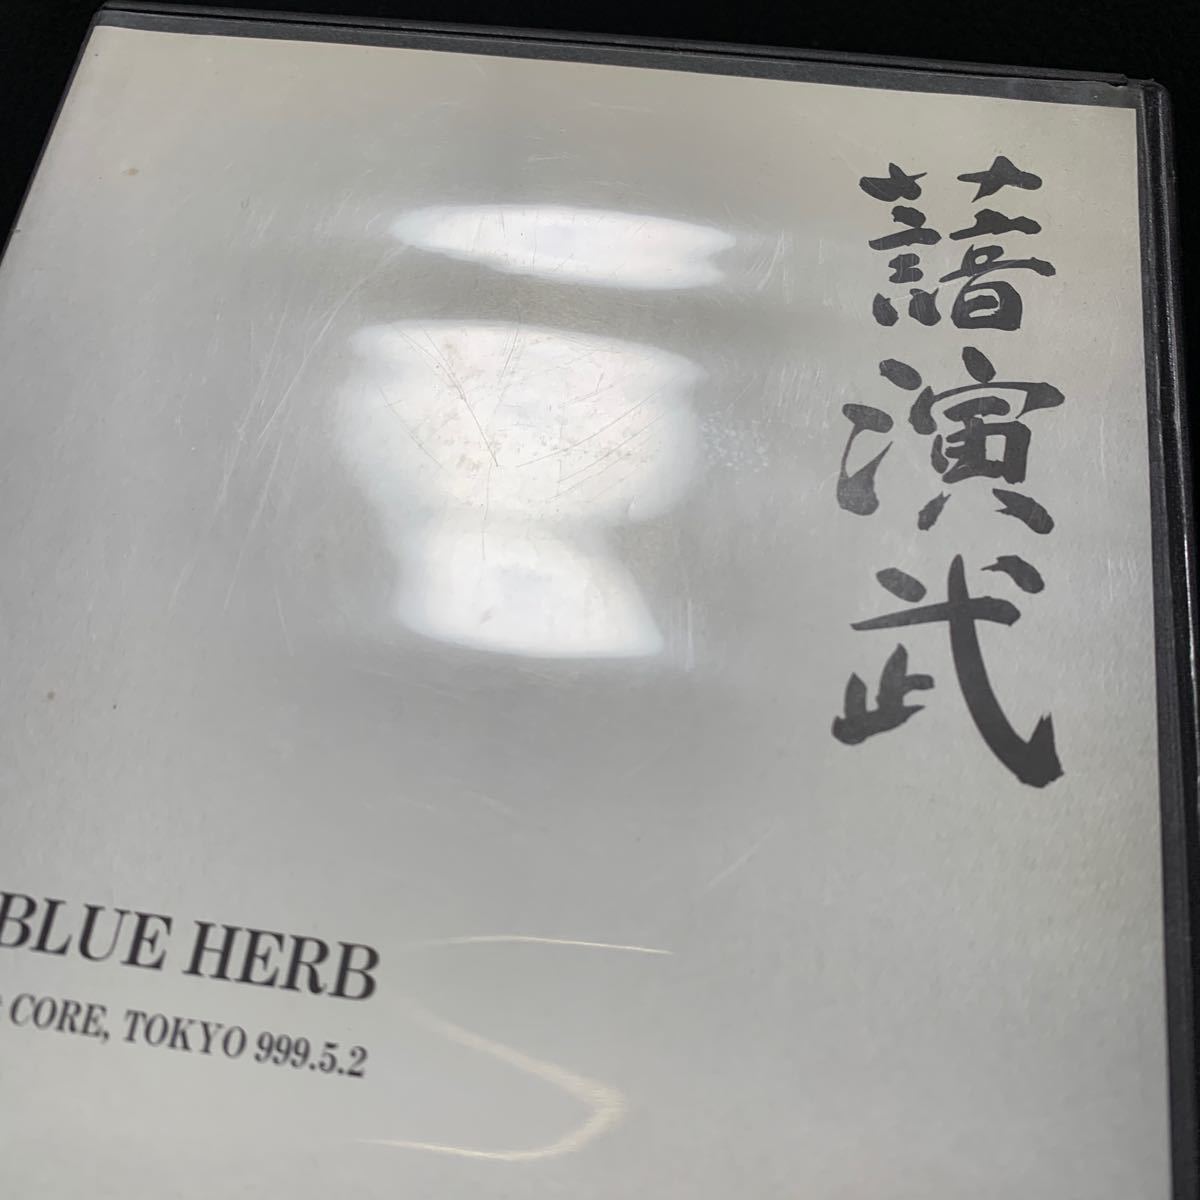 THA BLUE HERB  синий  ... DVD【... LIVE at CORE TOKYO 999.5.2】